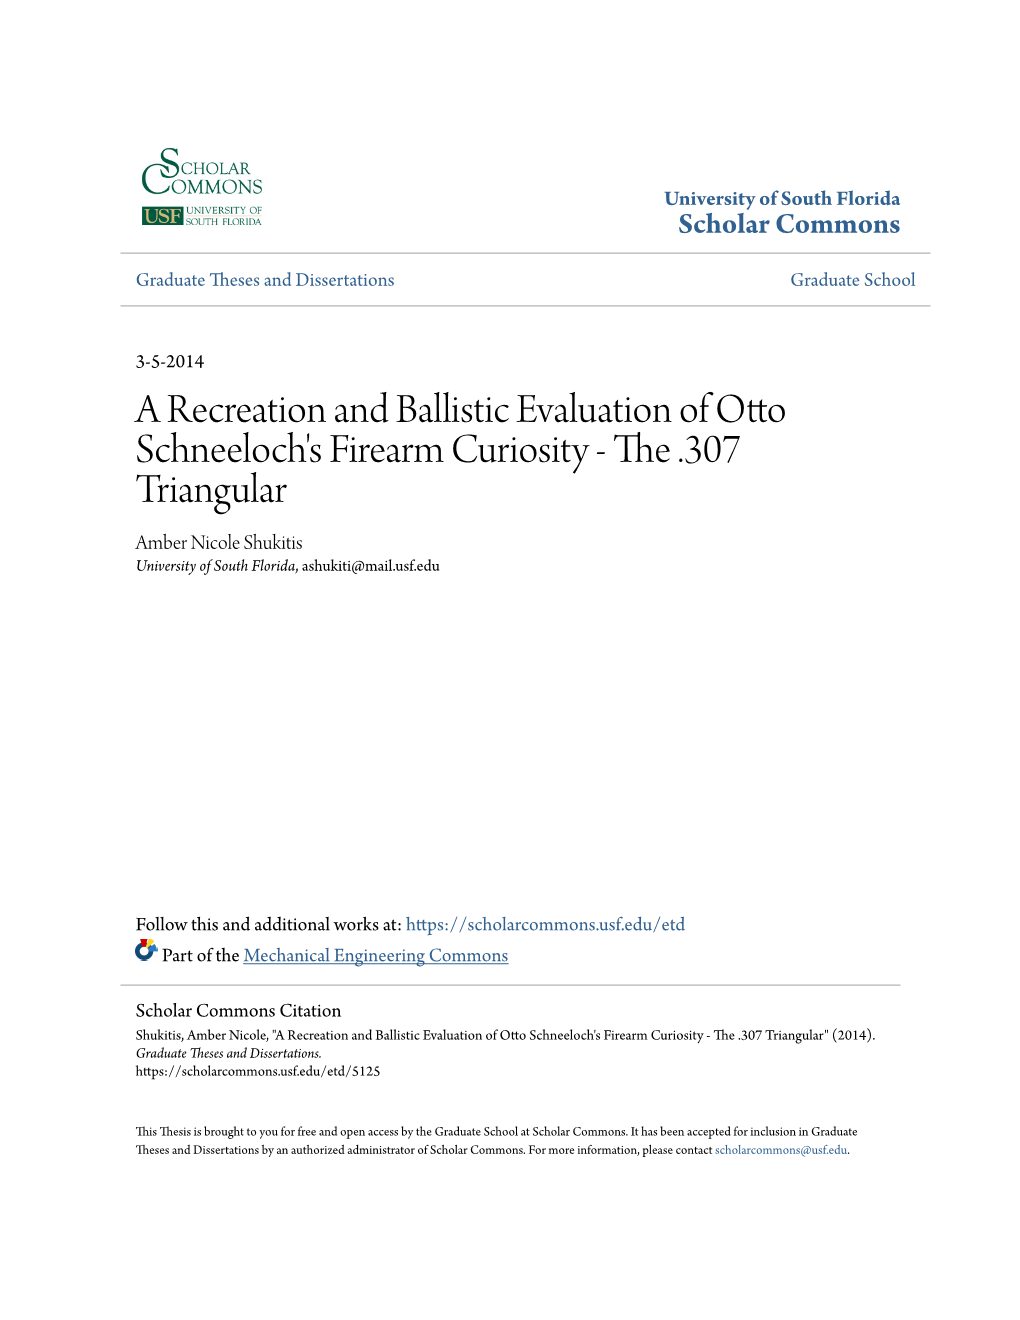 A Recreation and Ballistic Evaluation of Otto Schneeloch's Firearm Curiosity